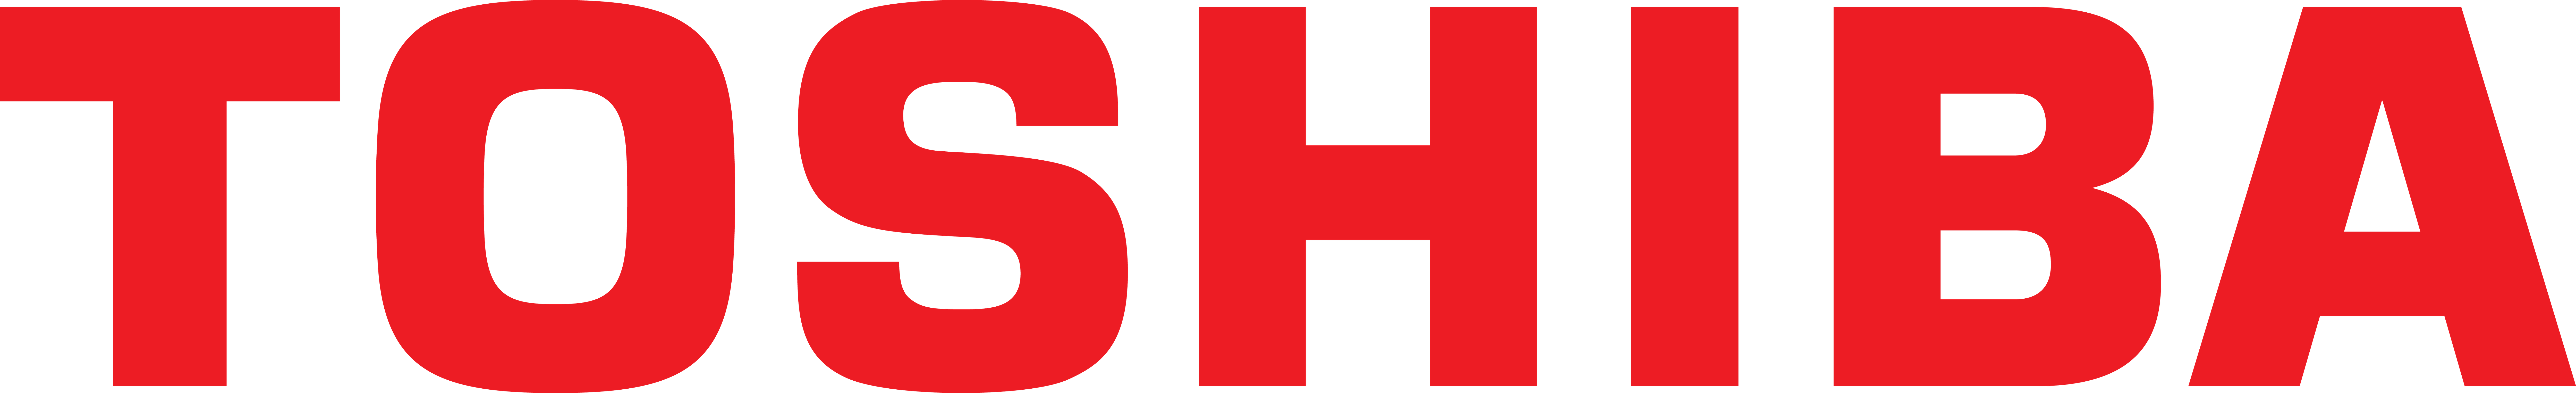 Toshiba-Logo-Red